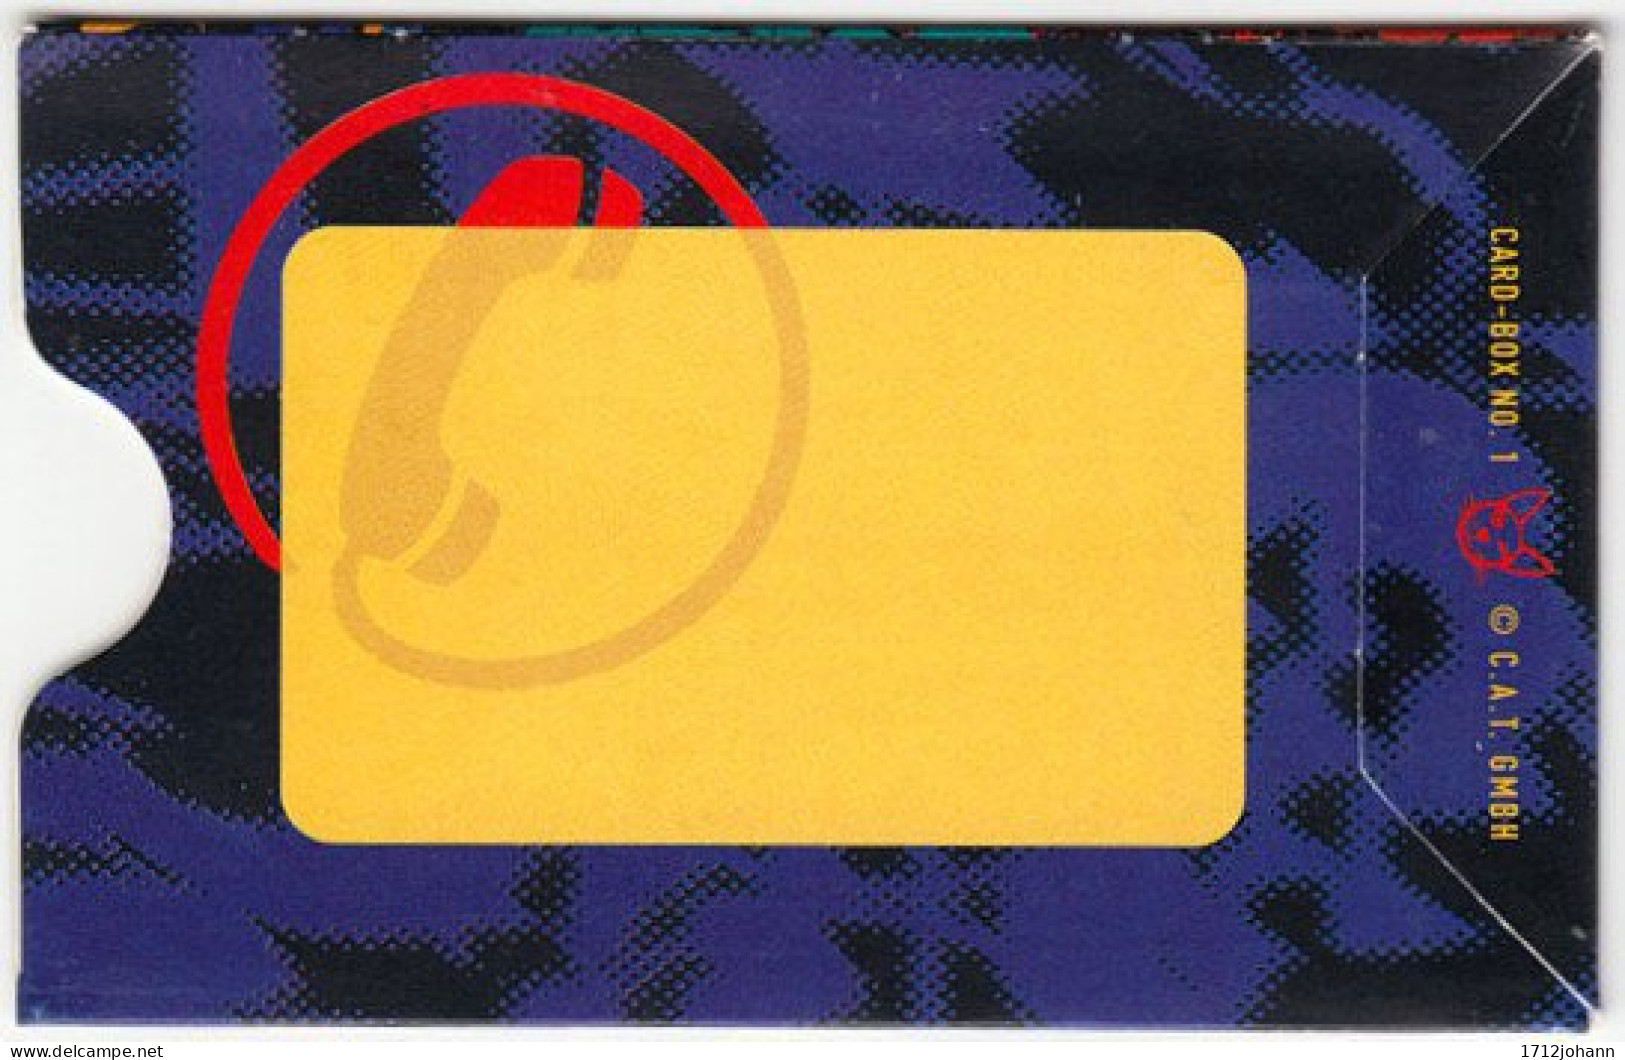 GERMANY CardBox A-007 - Mint - Material